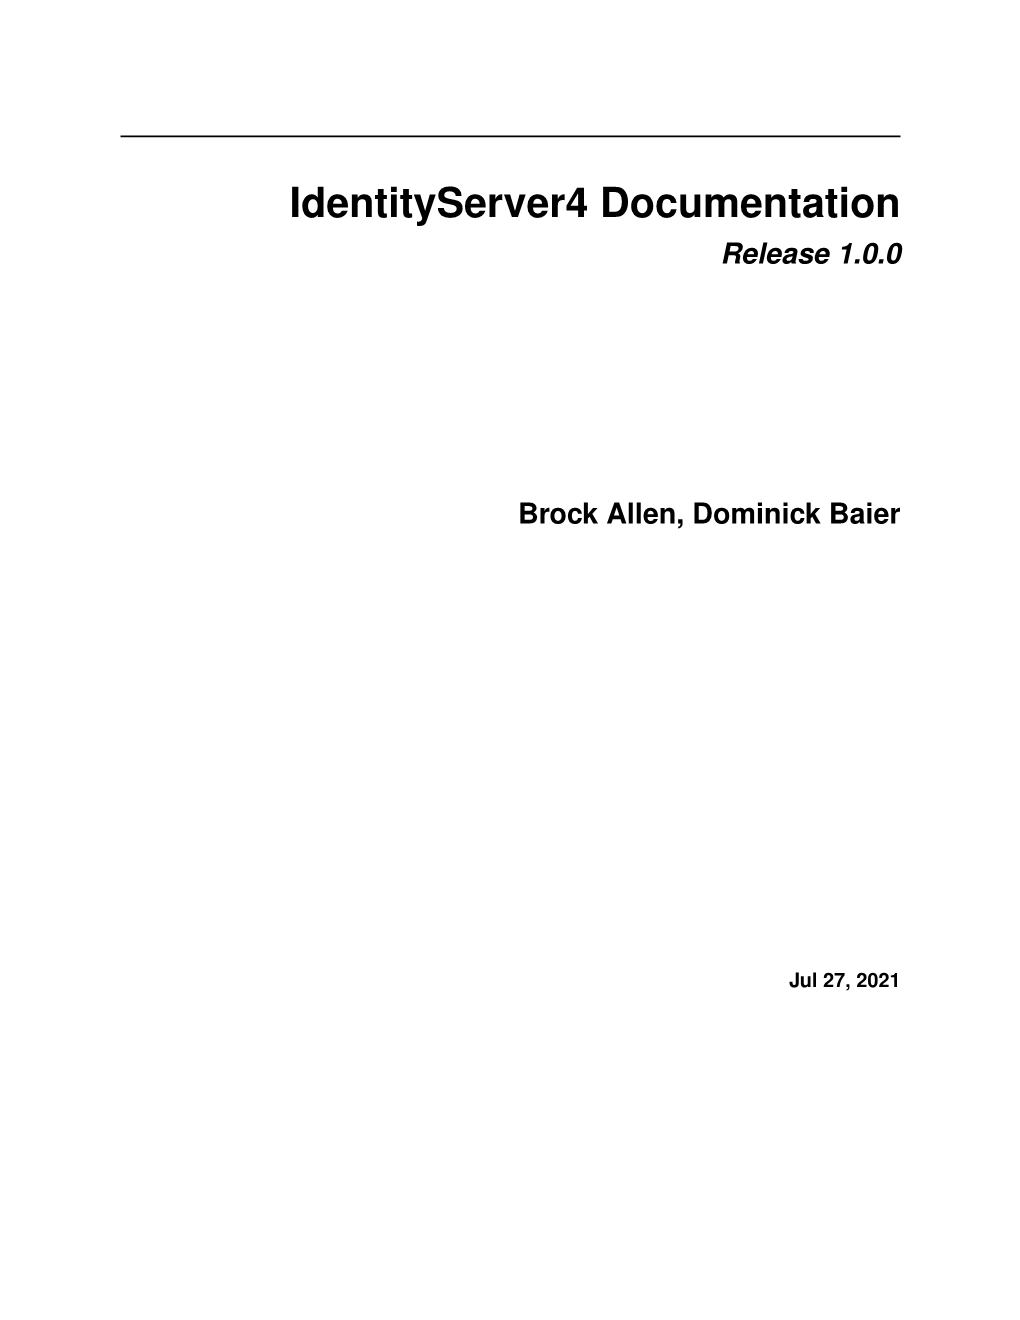 Identityserver4 Documentation Release 1.0.0